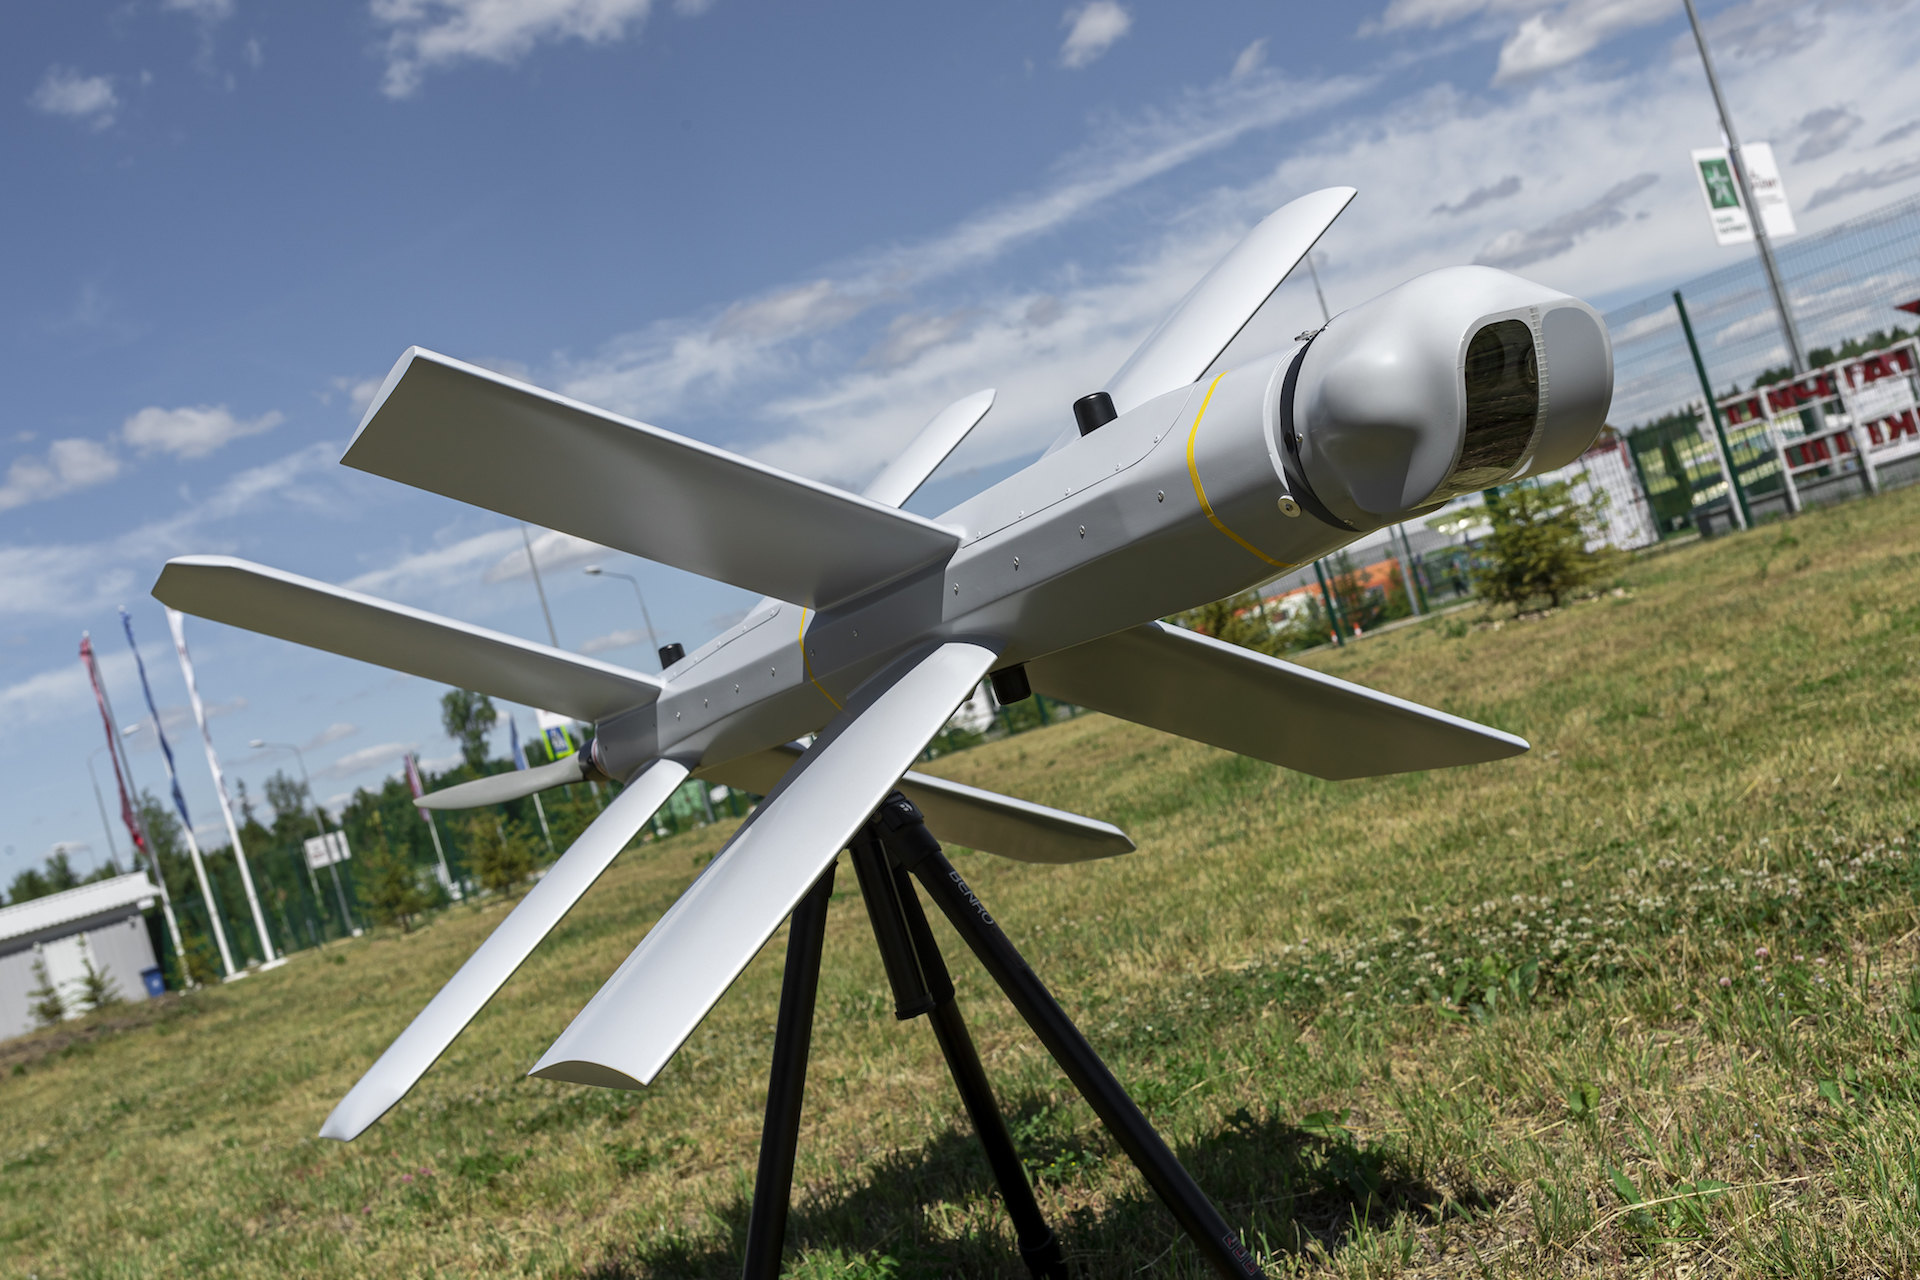 The Armed Forces of Ukraine shot down two Russian Lancet-3 kamikaze drones